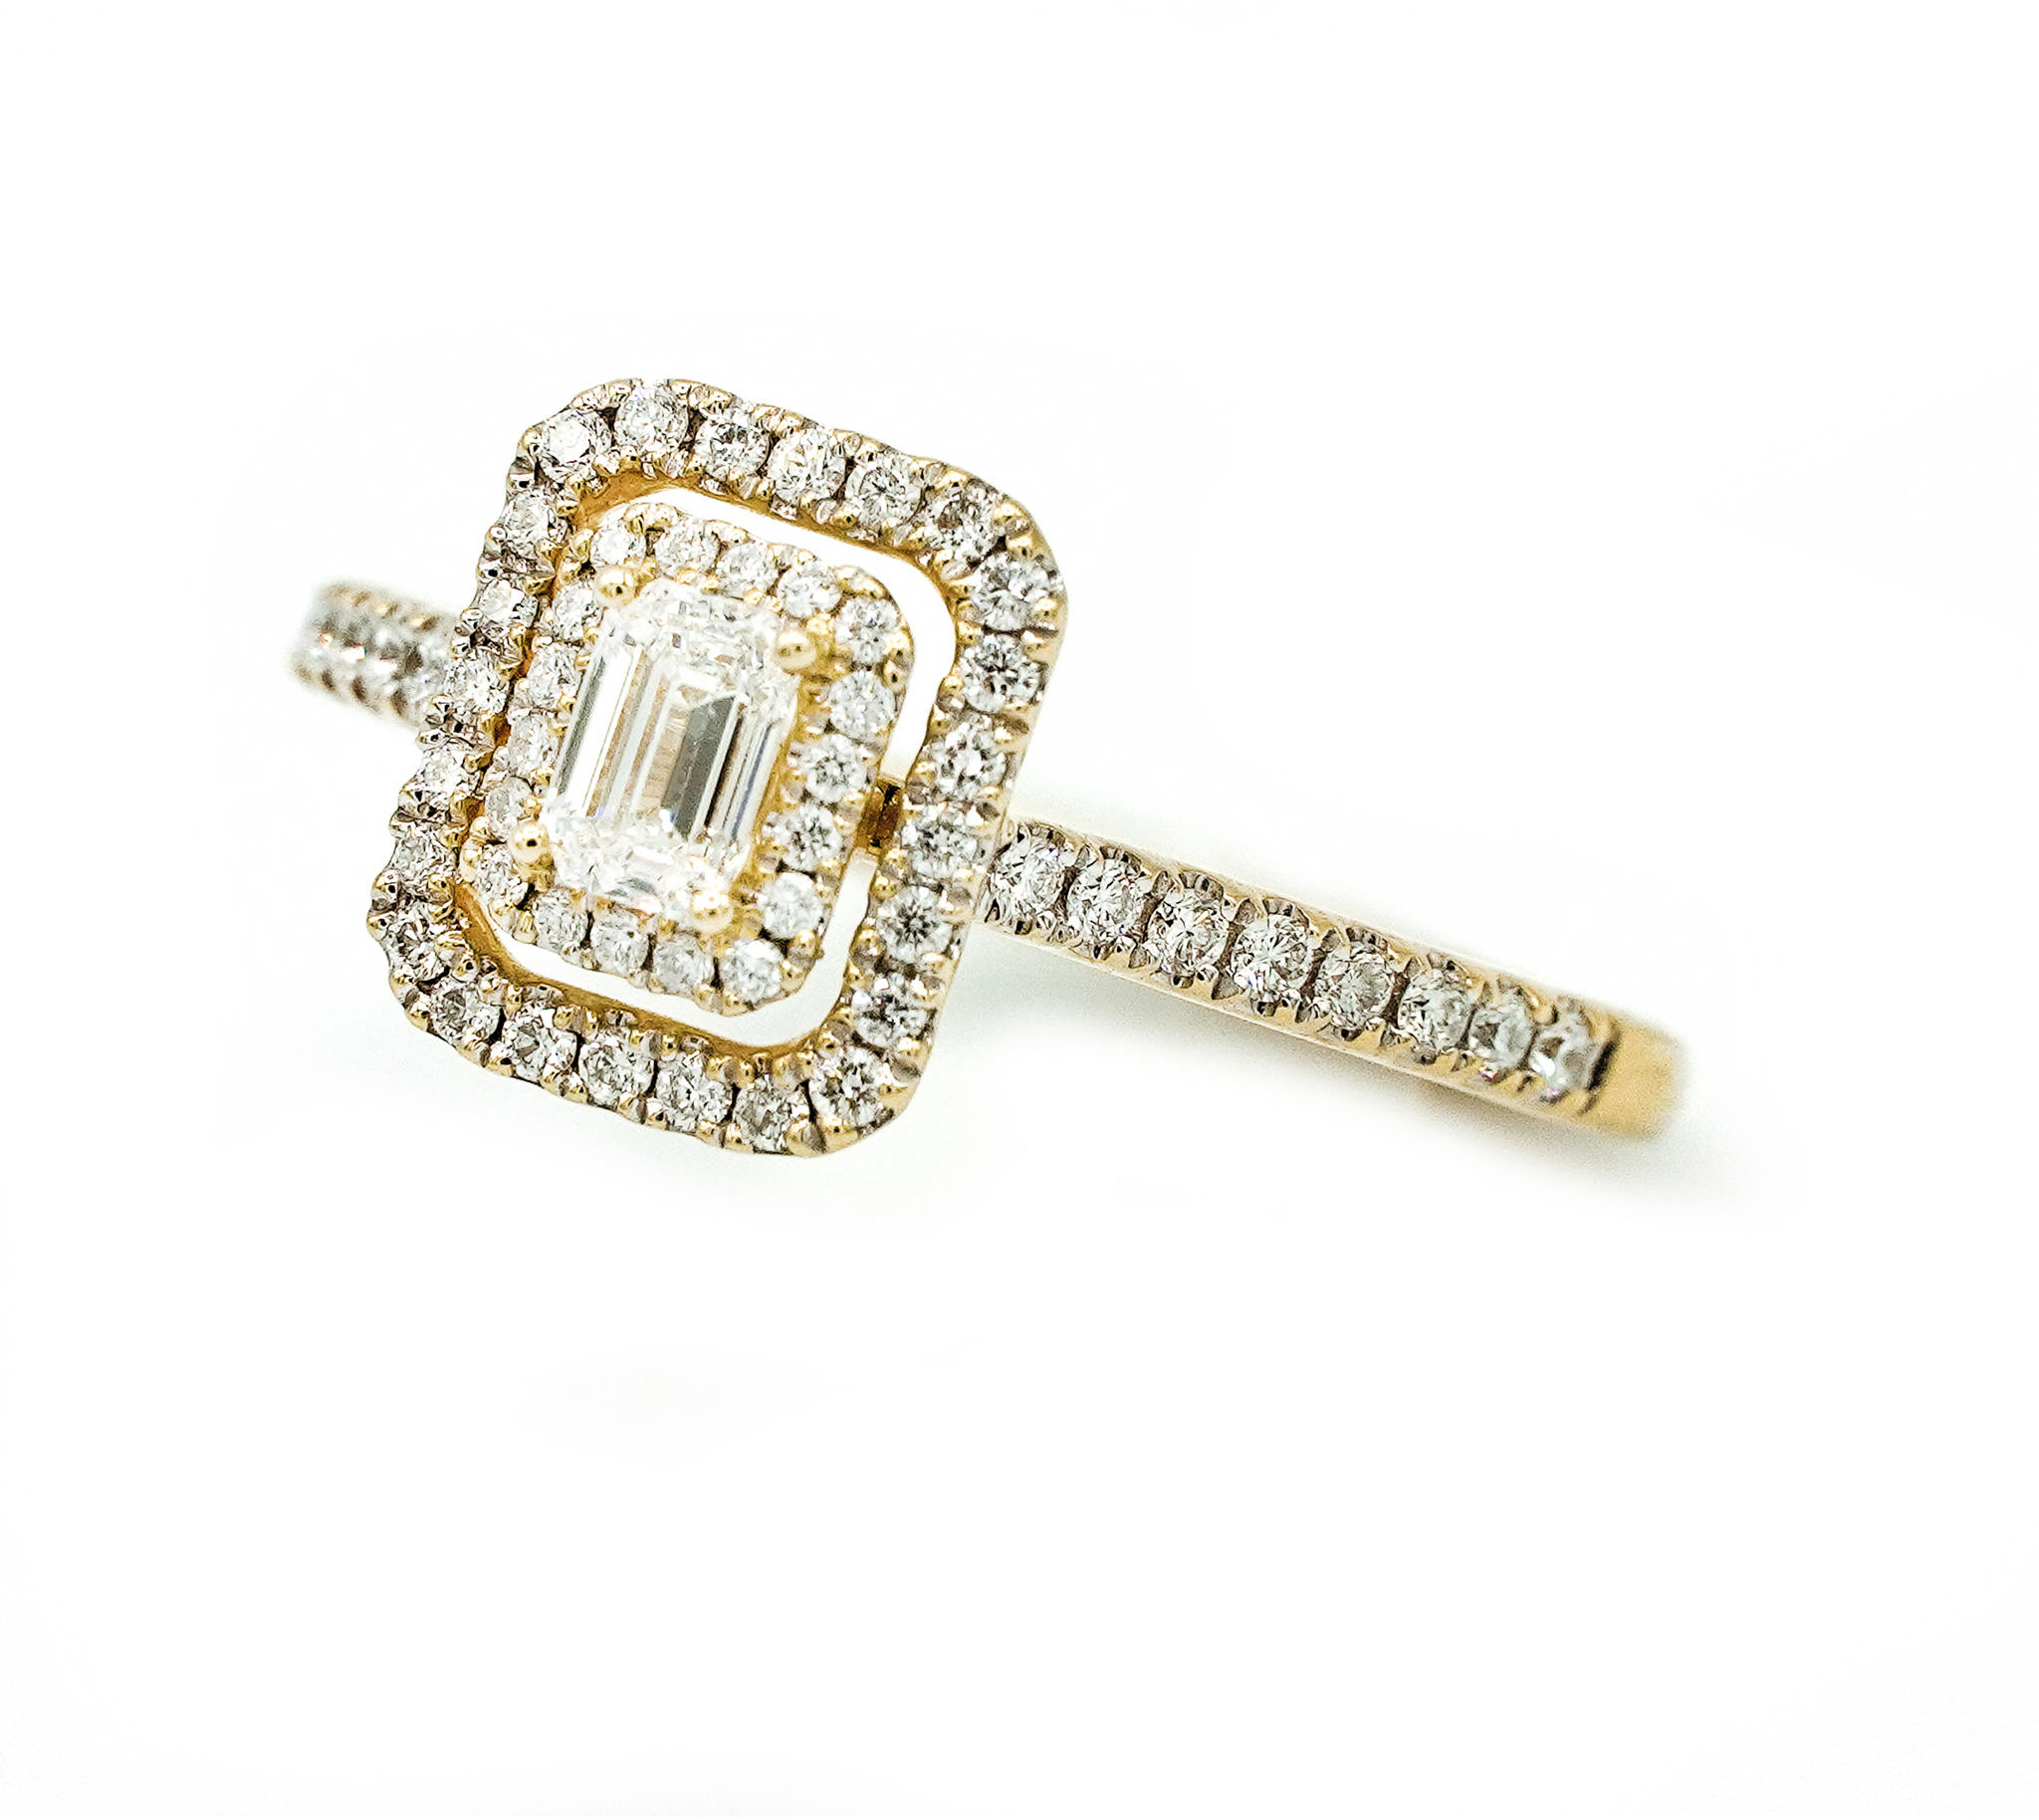 Zeghani - Emerald Cut Diamond Ring in 14kt Yellow Gold